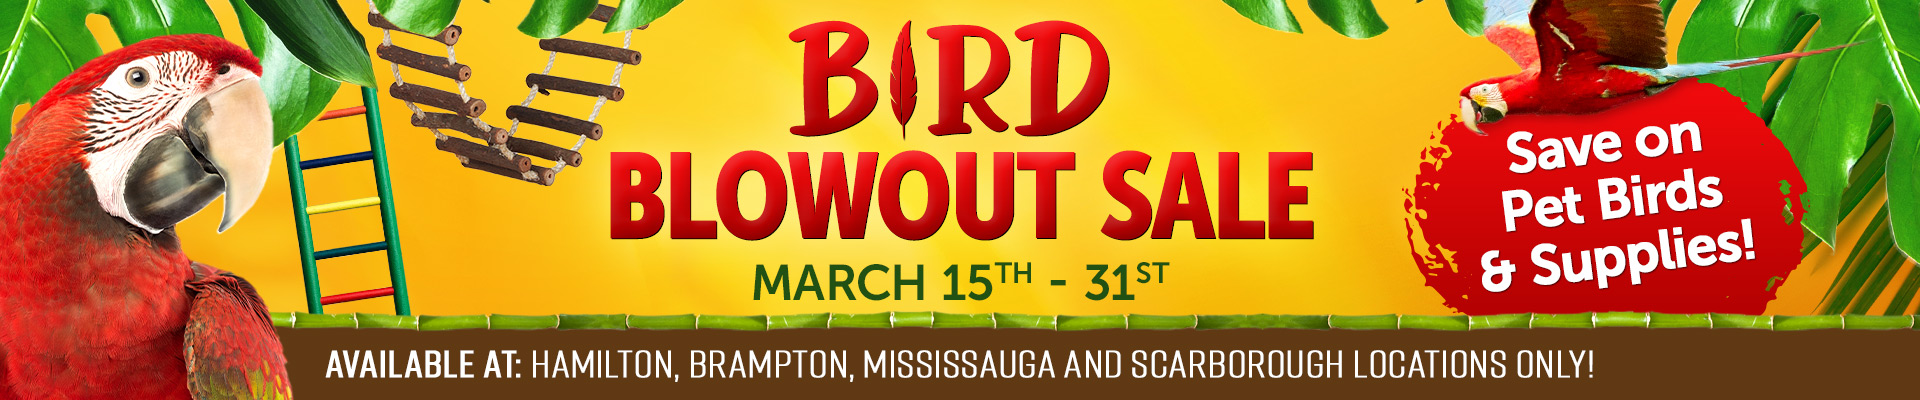 Bird Blowout Sale